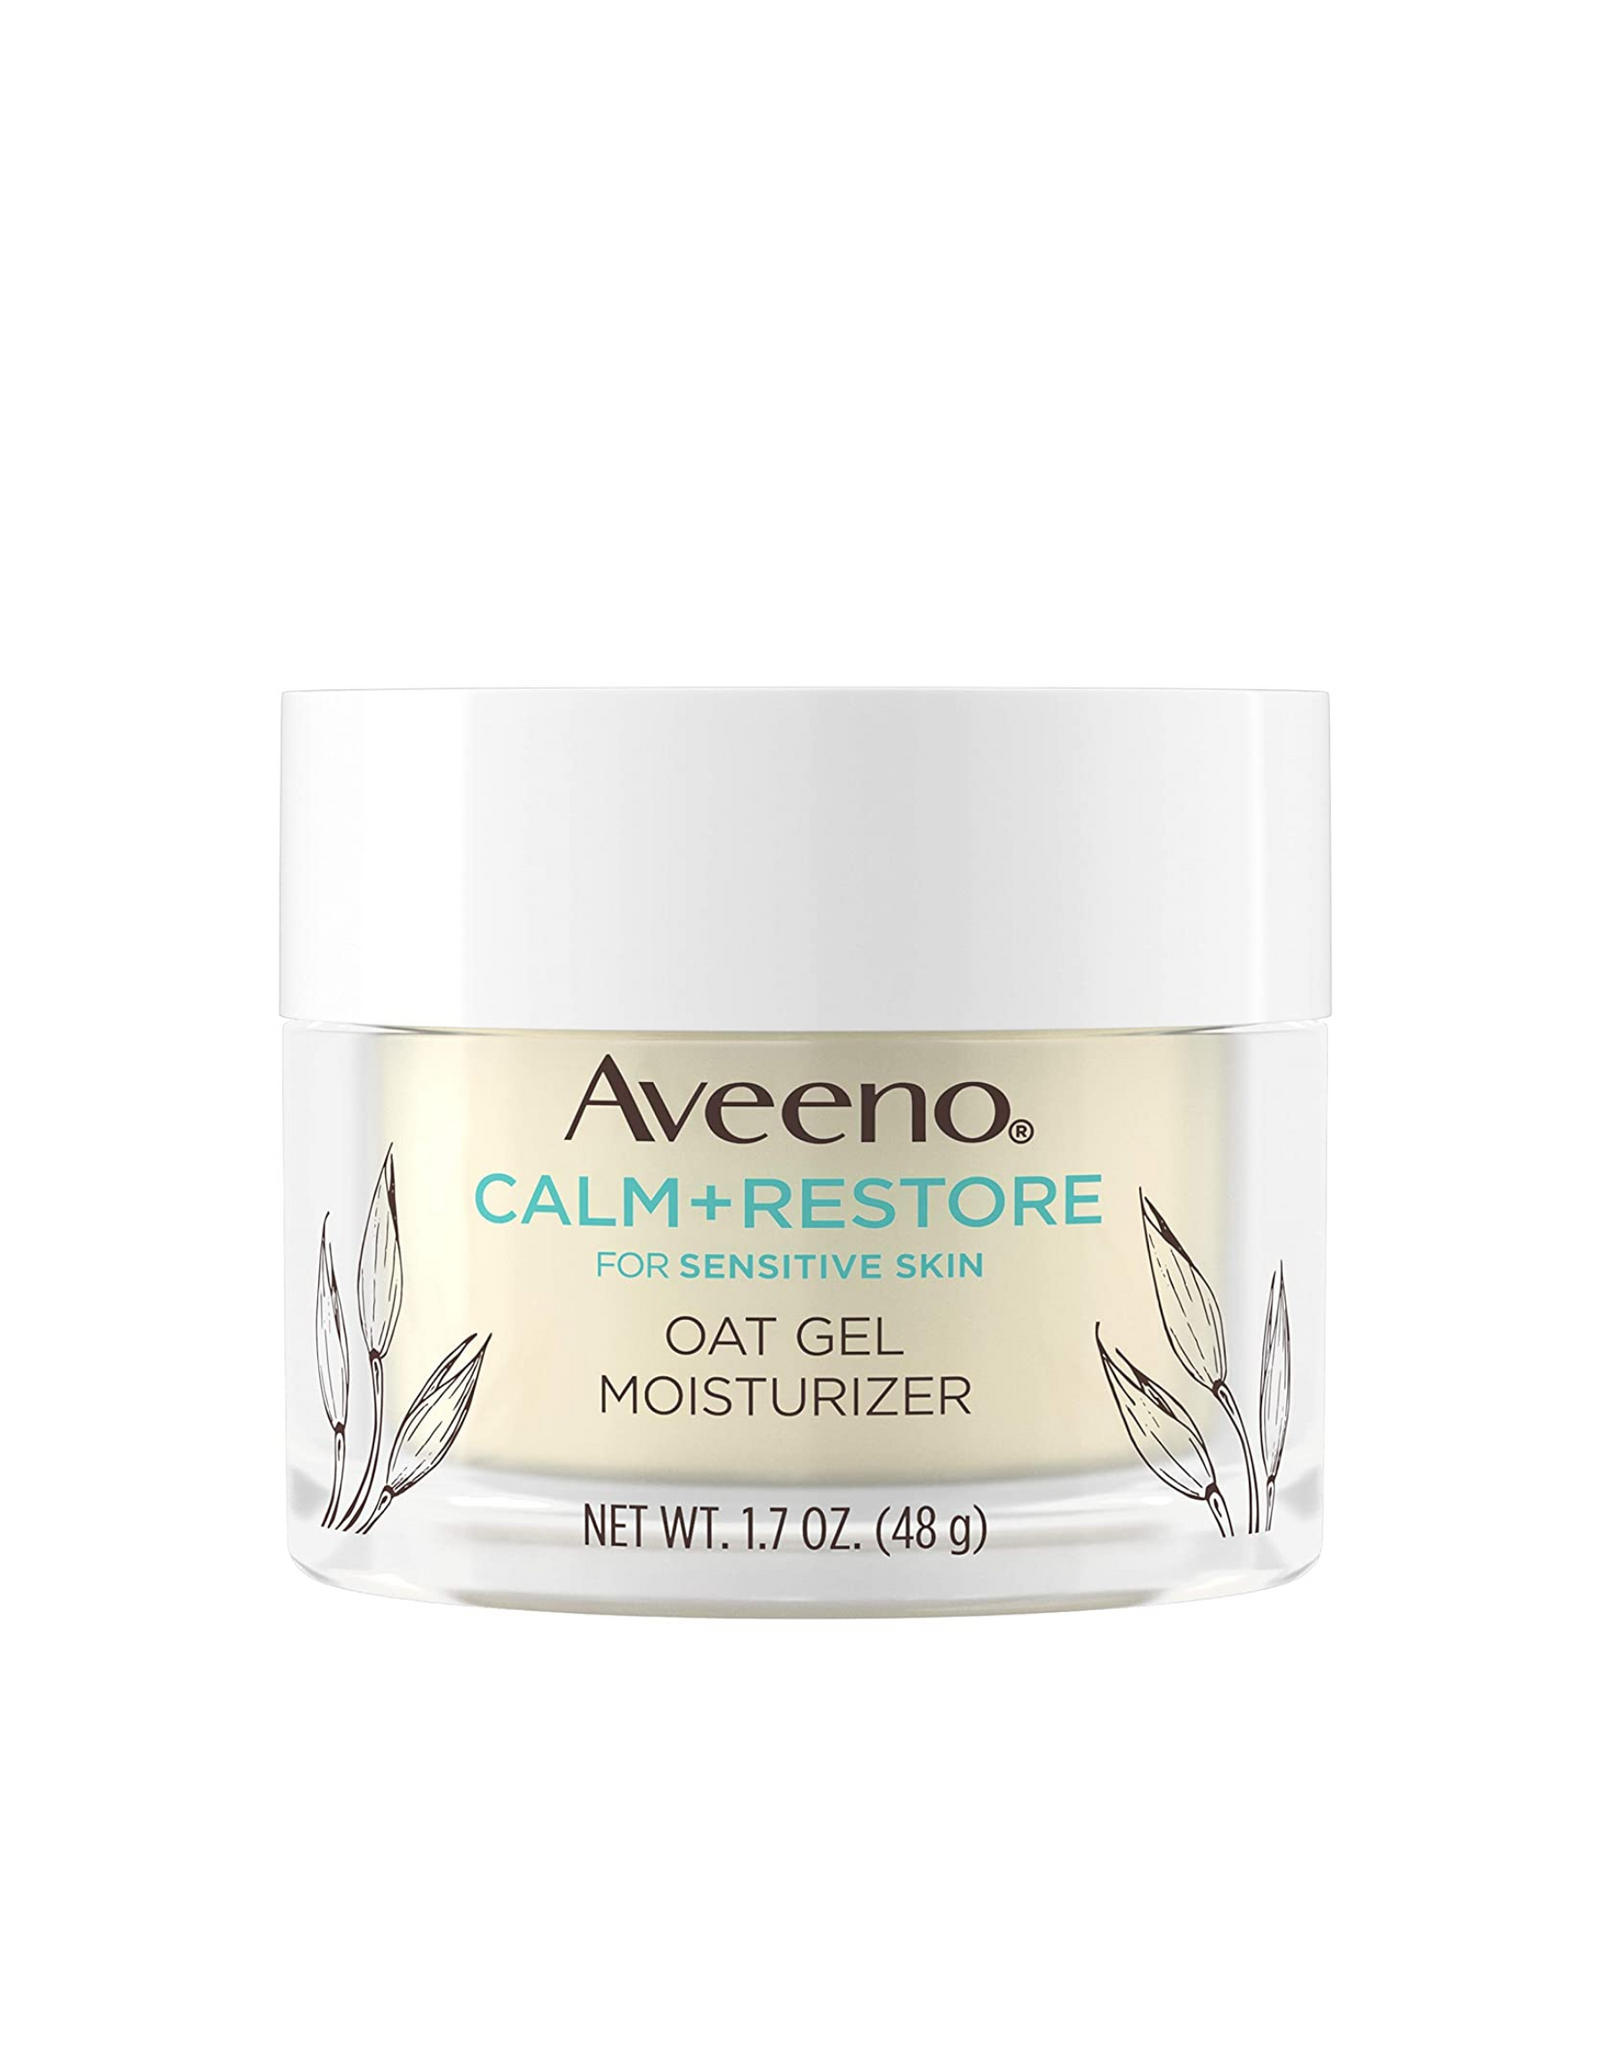 Aveeno Calm + Restore Oat Gel Facial Moisturizer for Sensitive Skin, 1.7 oz